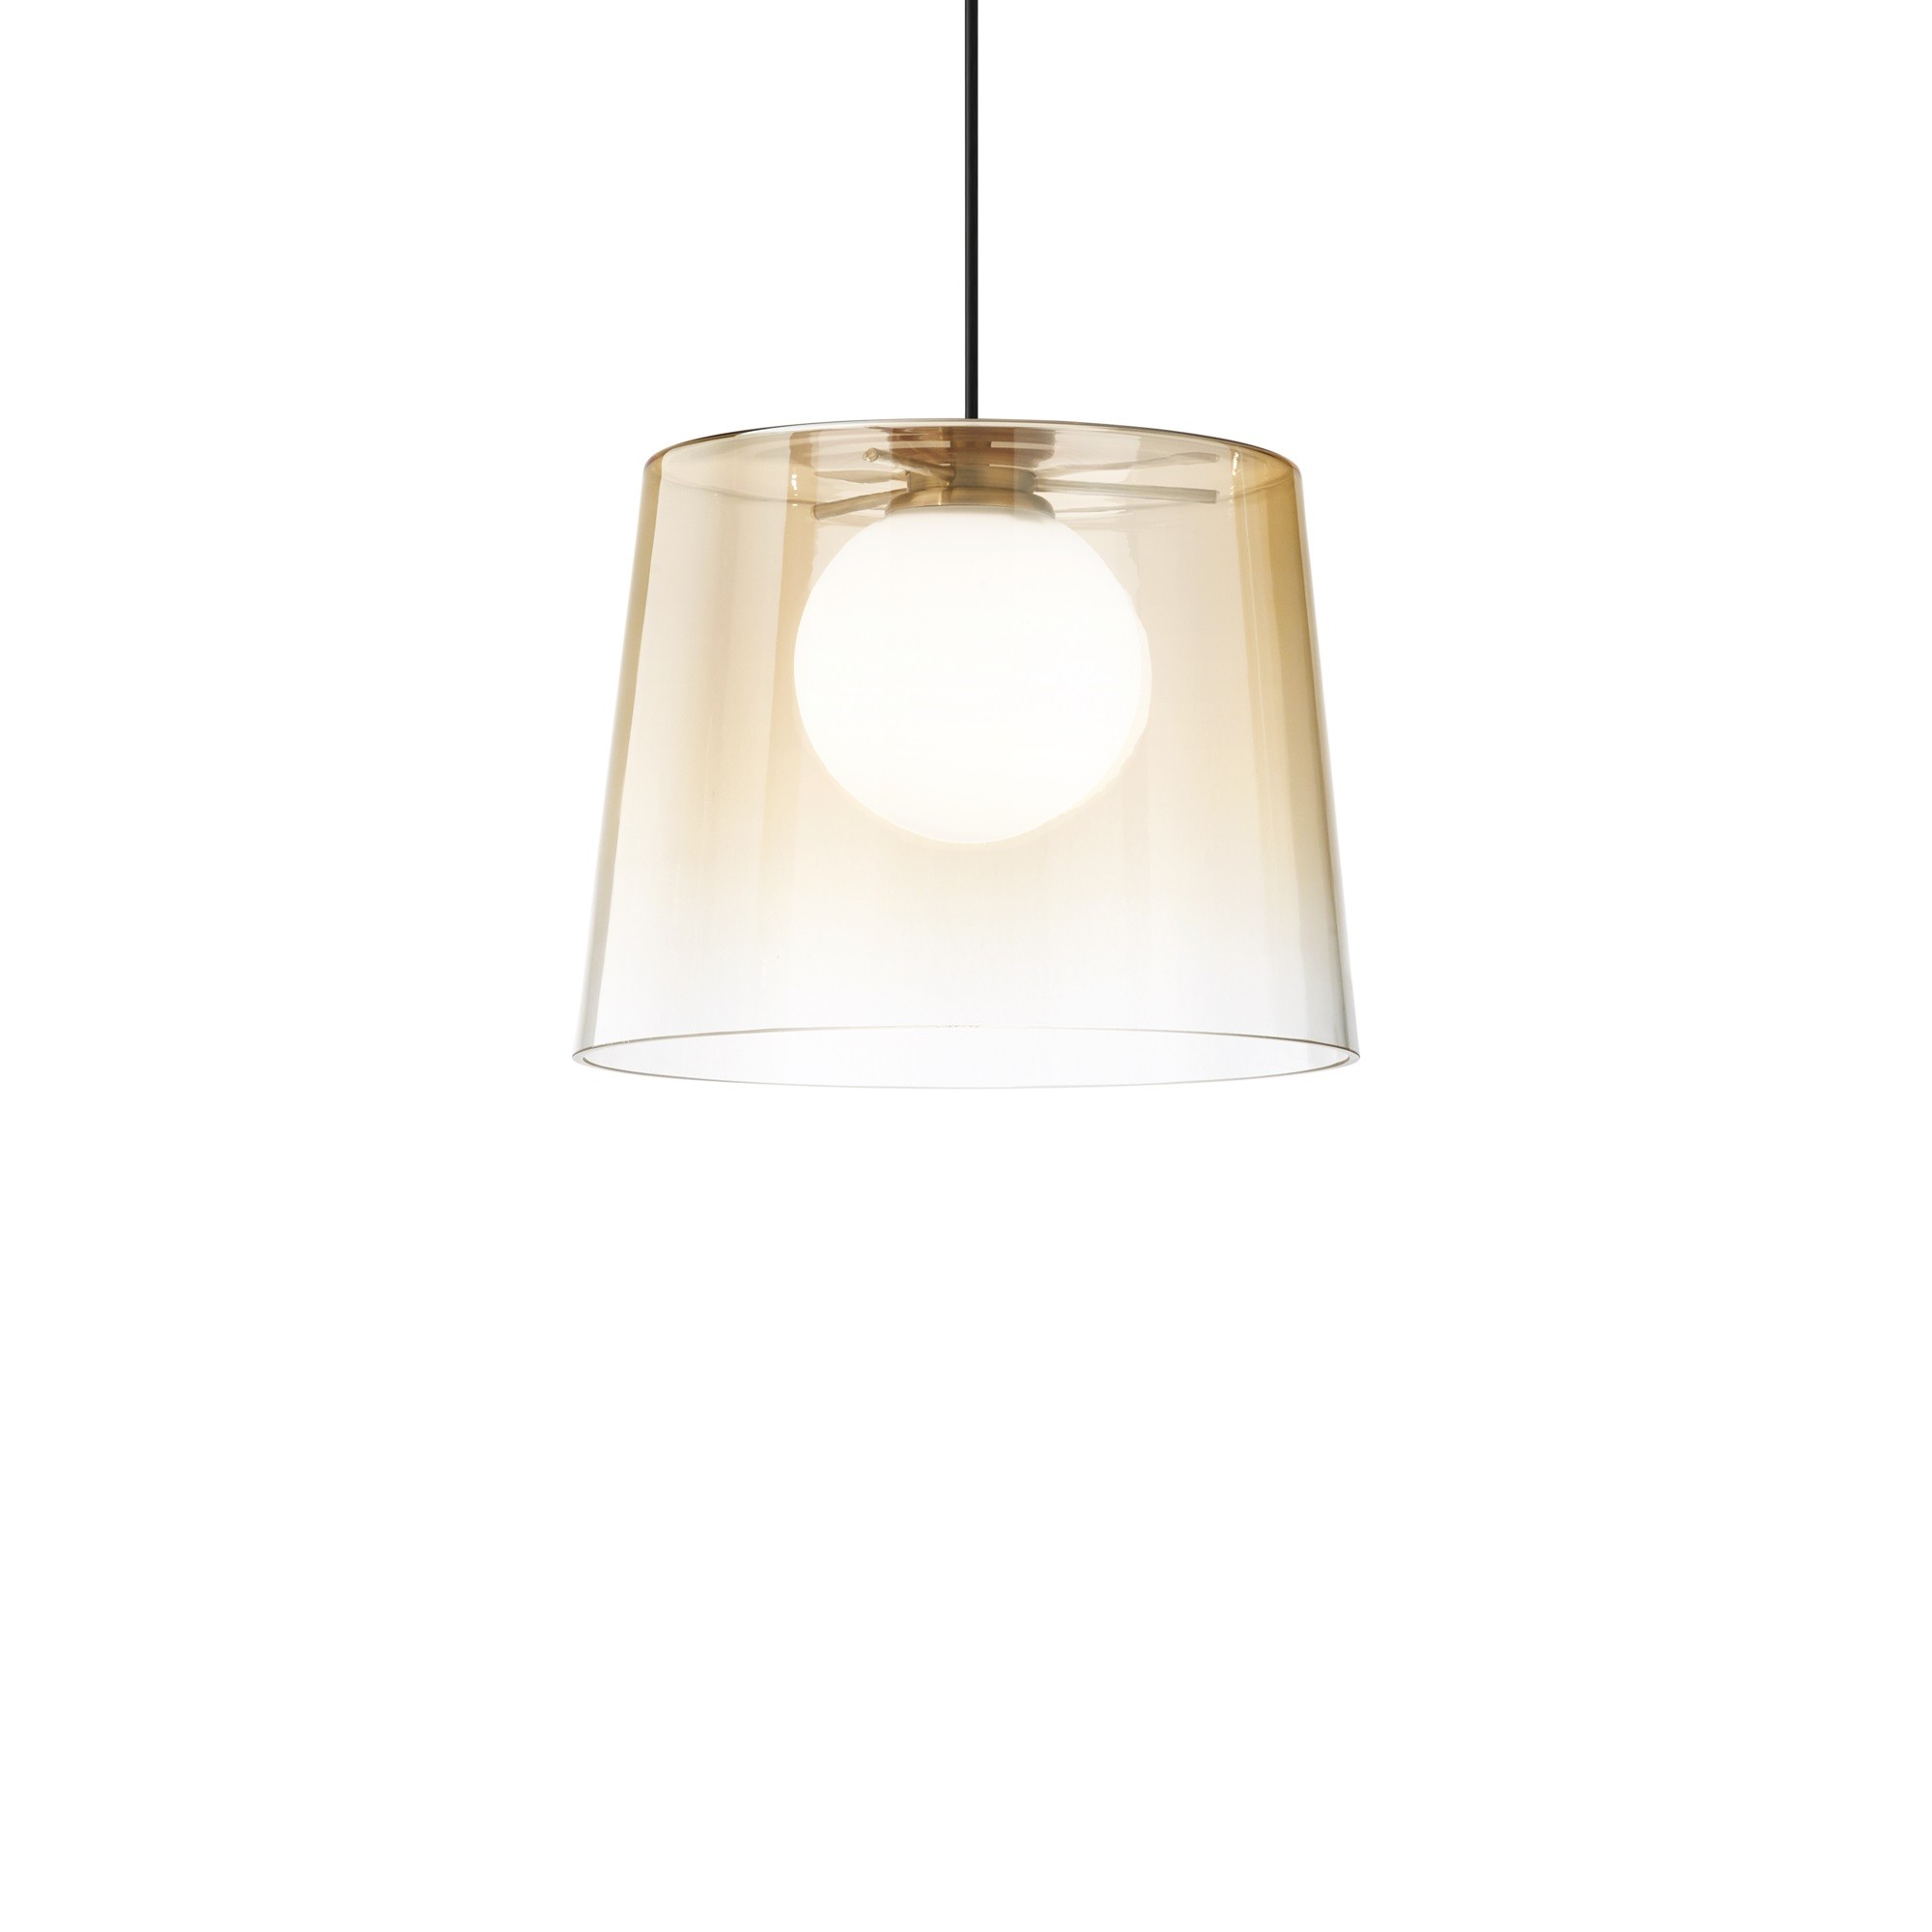 Lampadario a sospensione moderno vetro design ambra per cucina DL1696